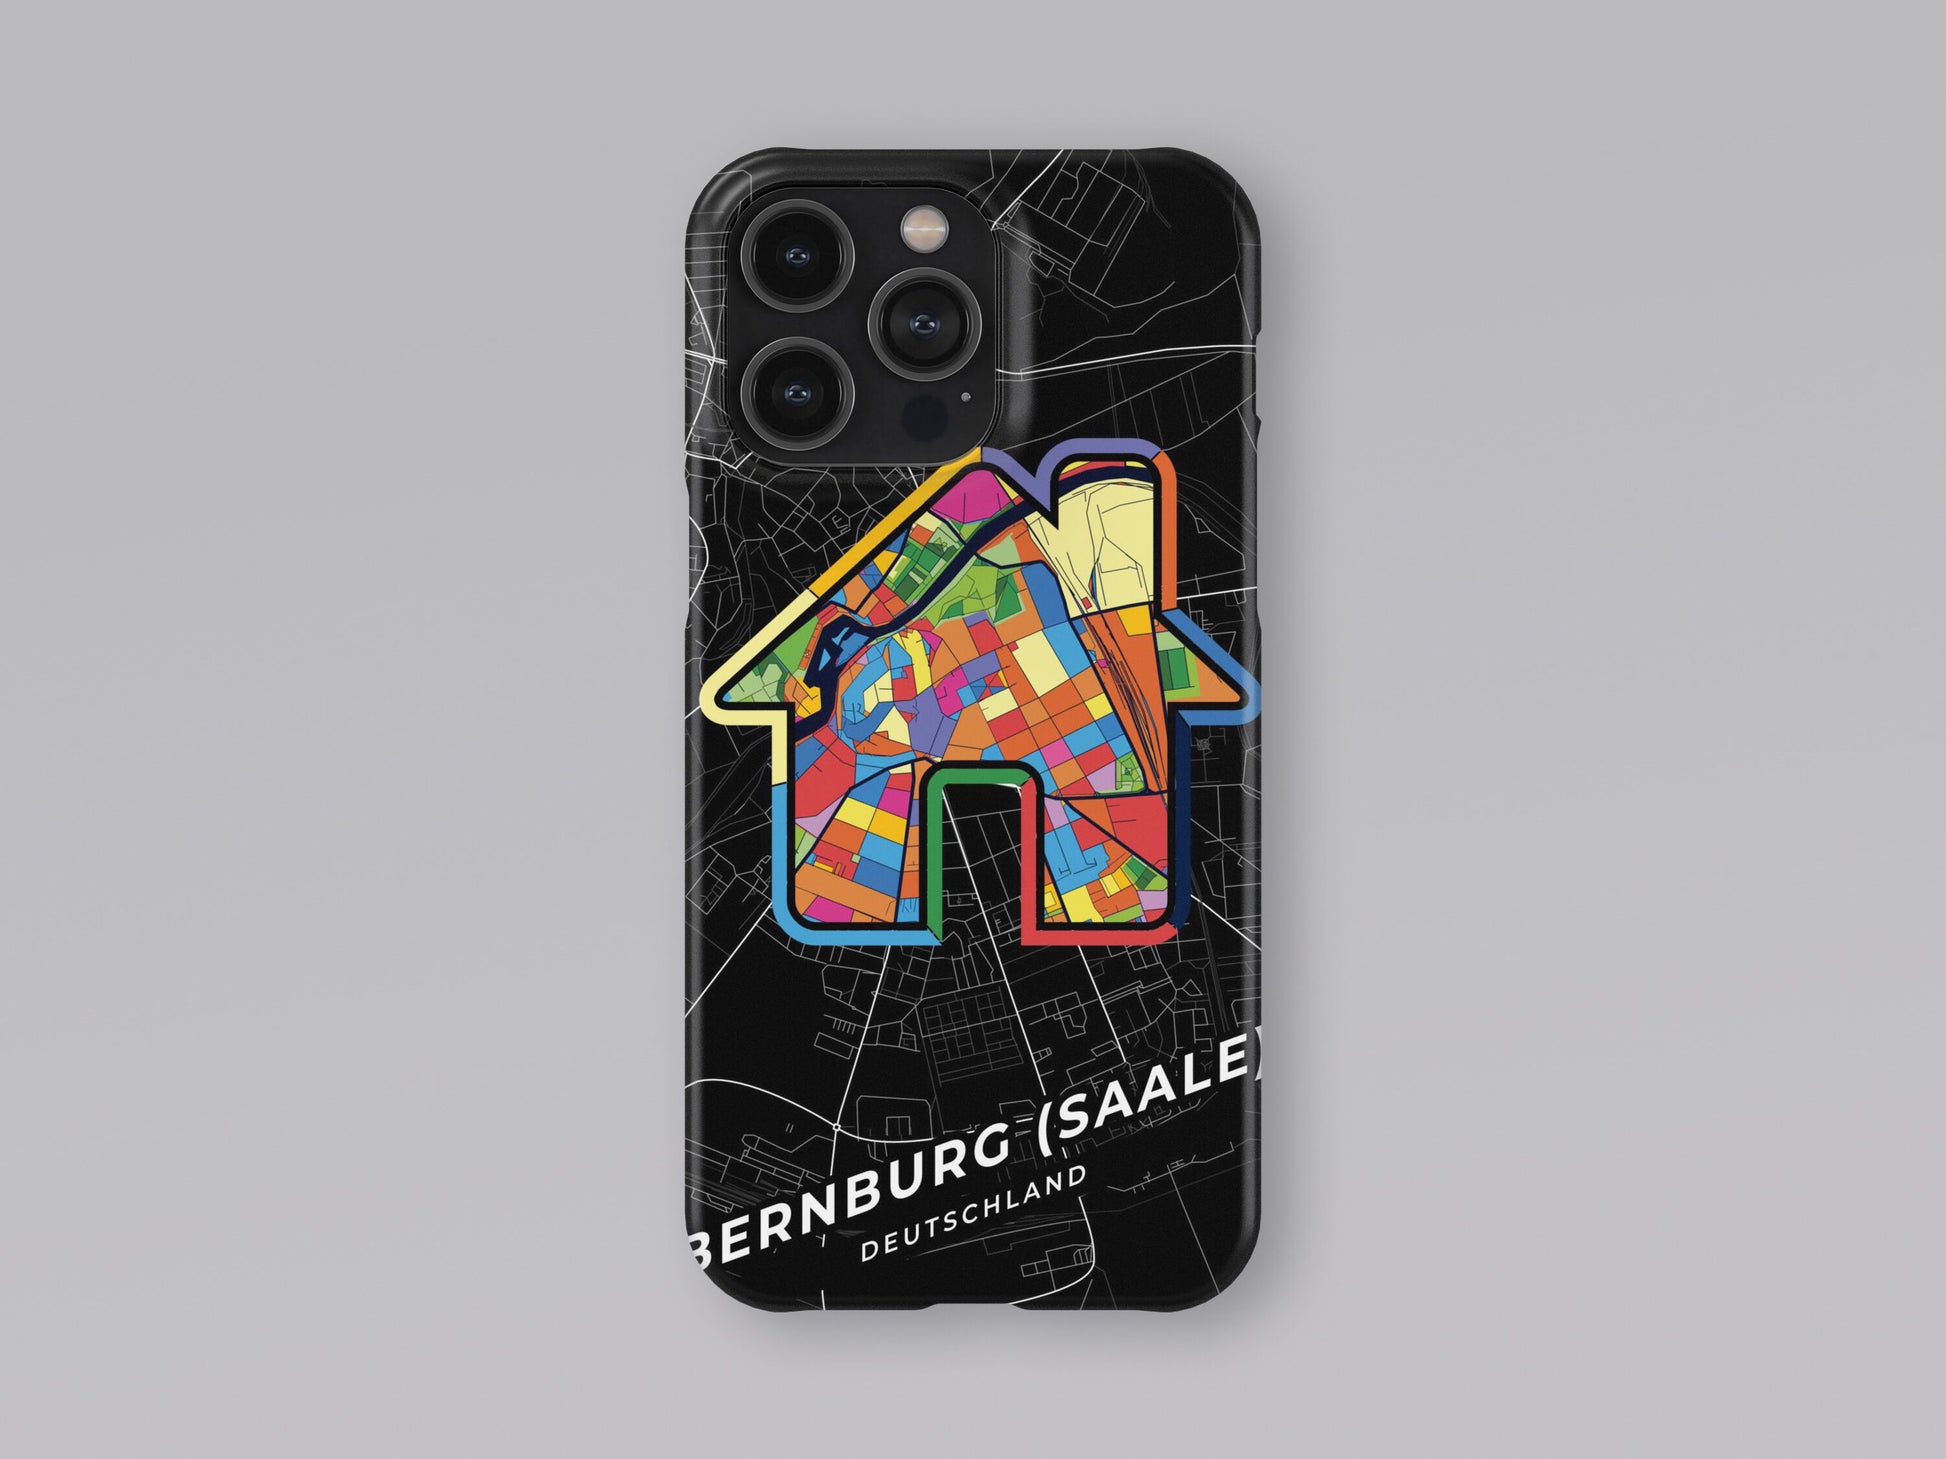 Bernburg (Saale) Deutschland slim phone case with colorful icon. Birthday, wedding or housewarming gift. Couple match cases. 3